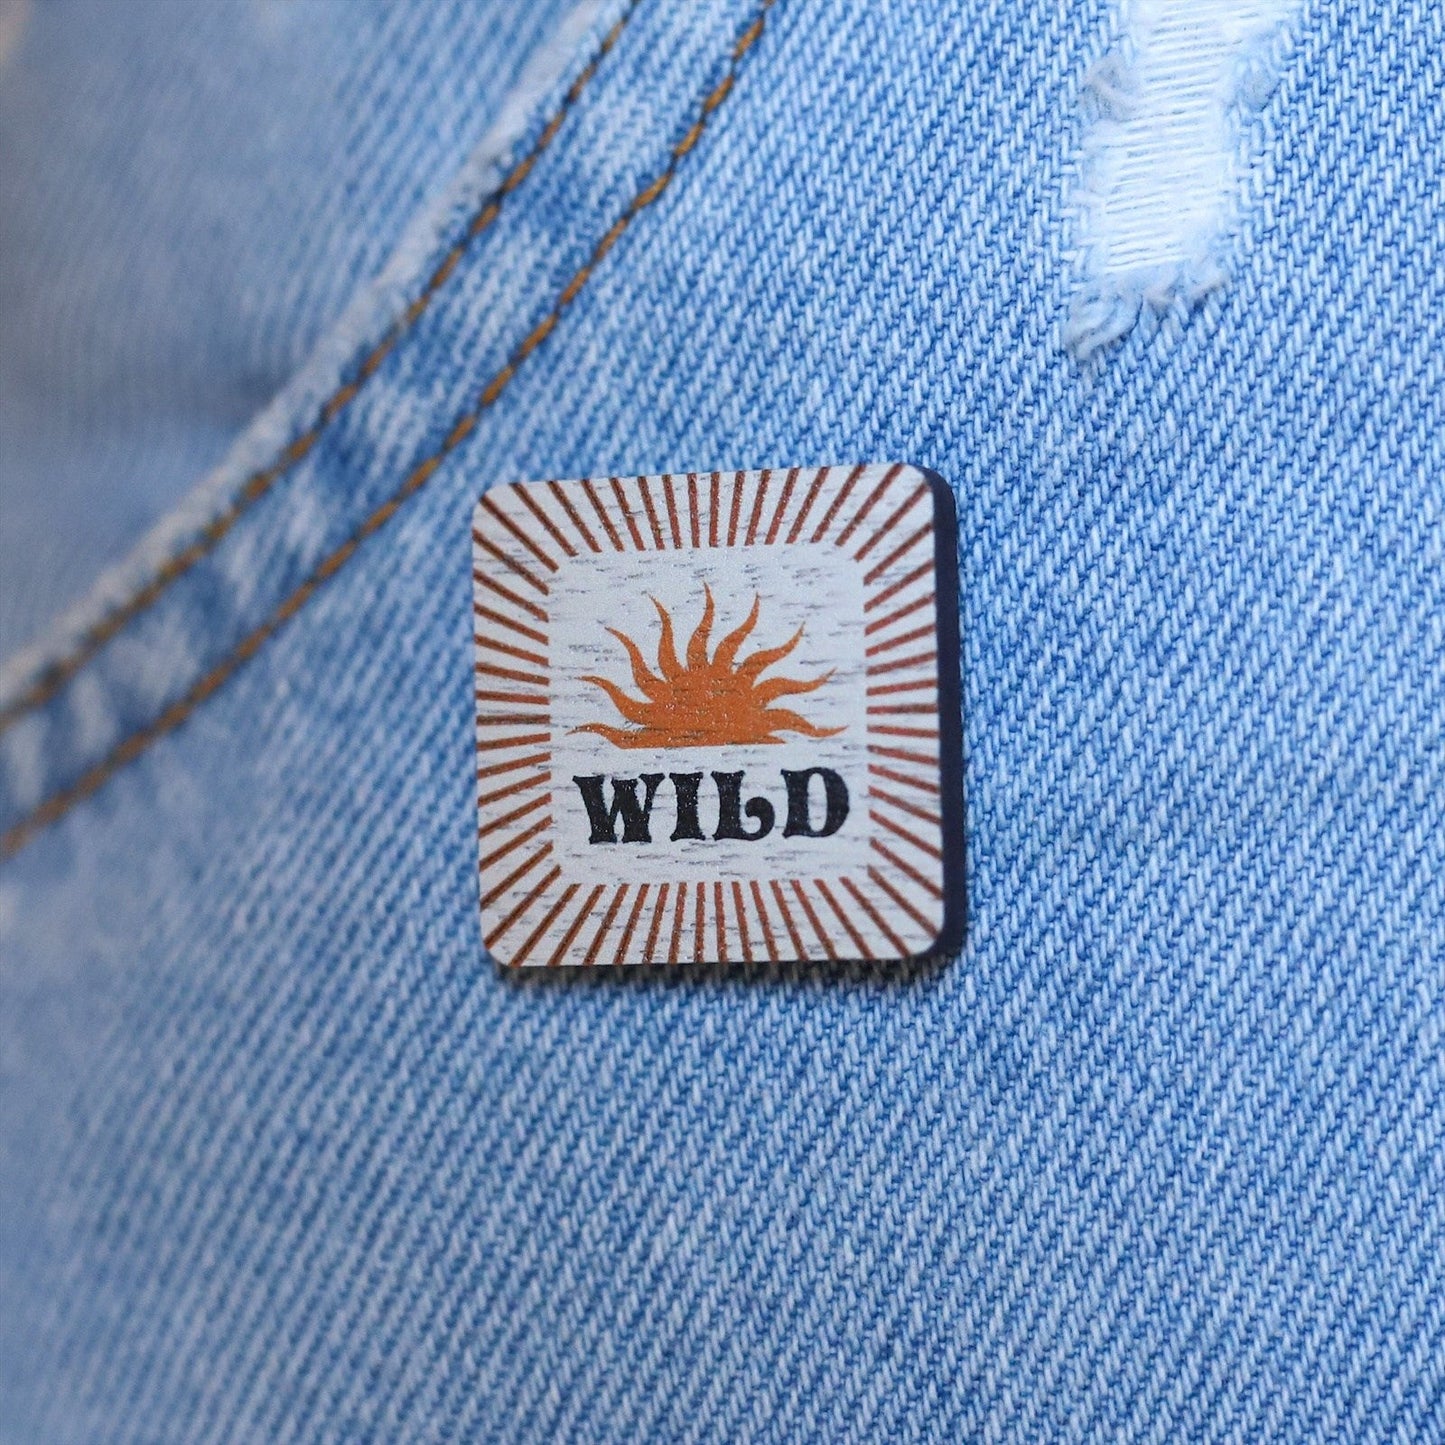 Wild Boho Sunburst Wooden Pin Badge